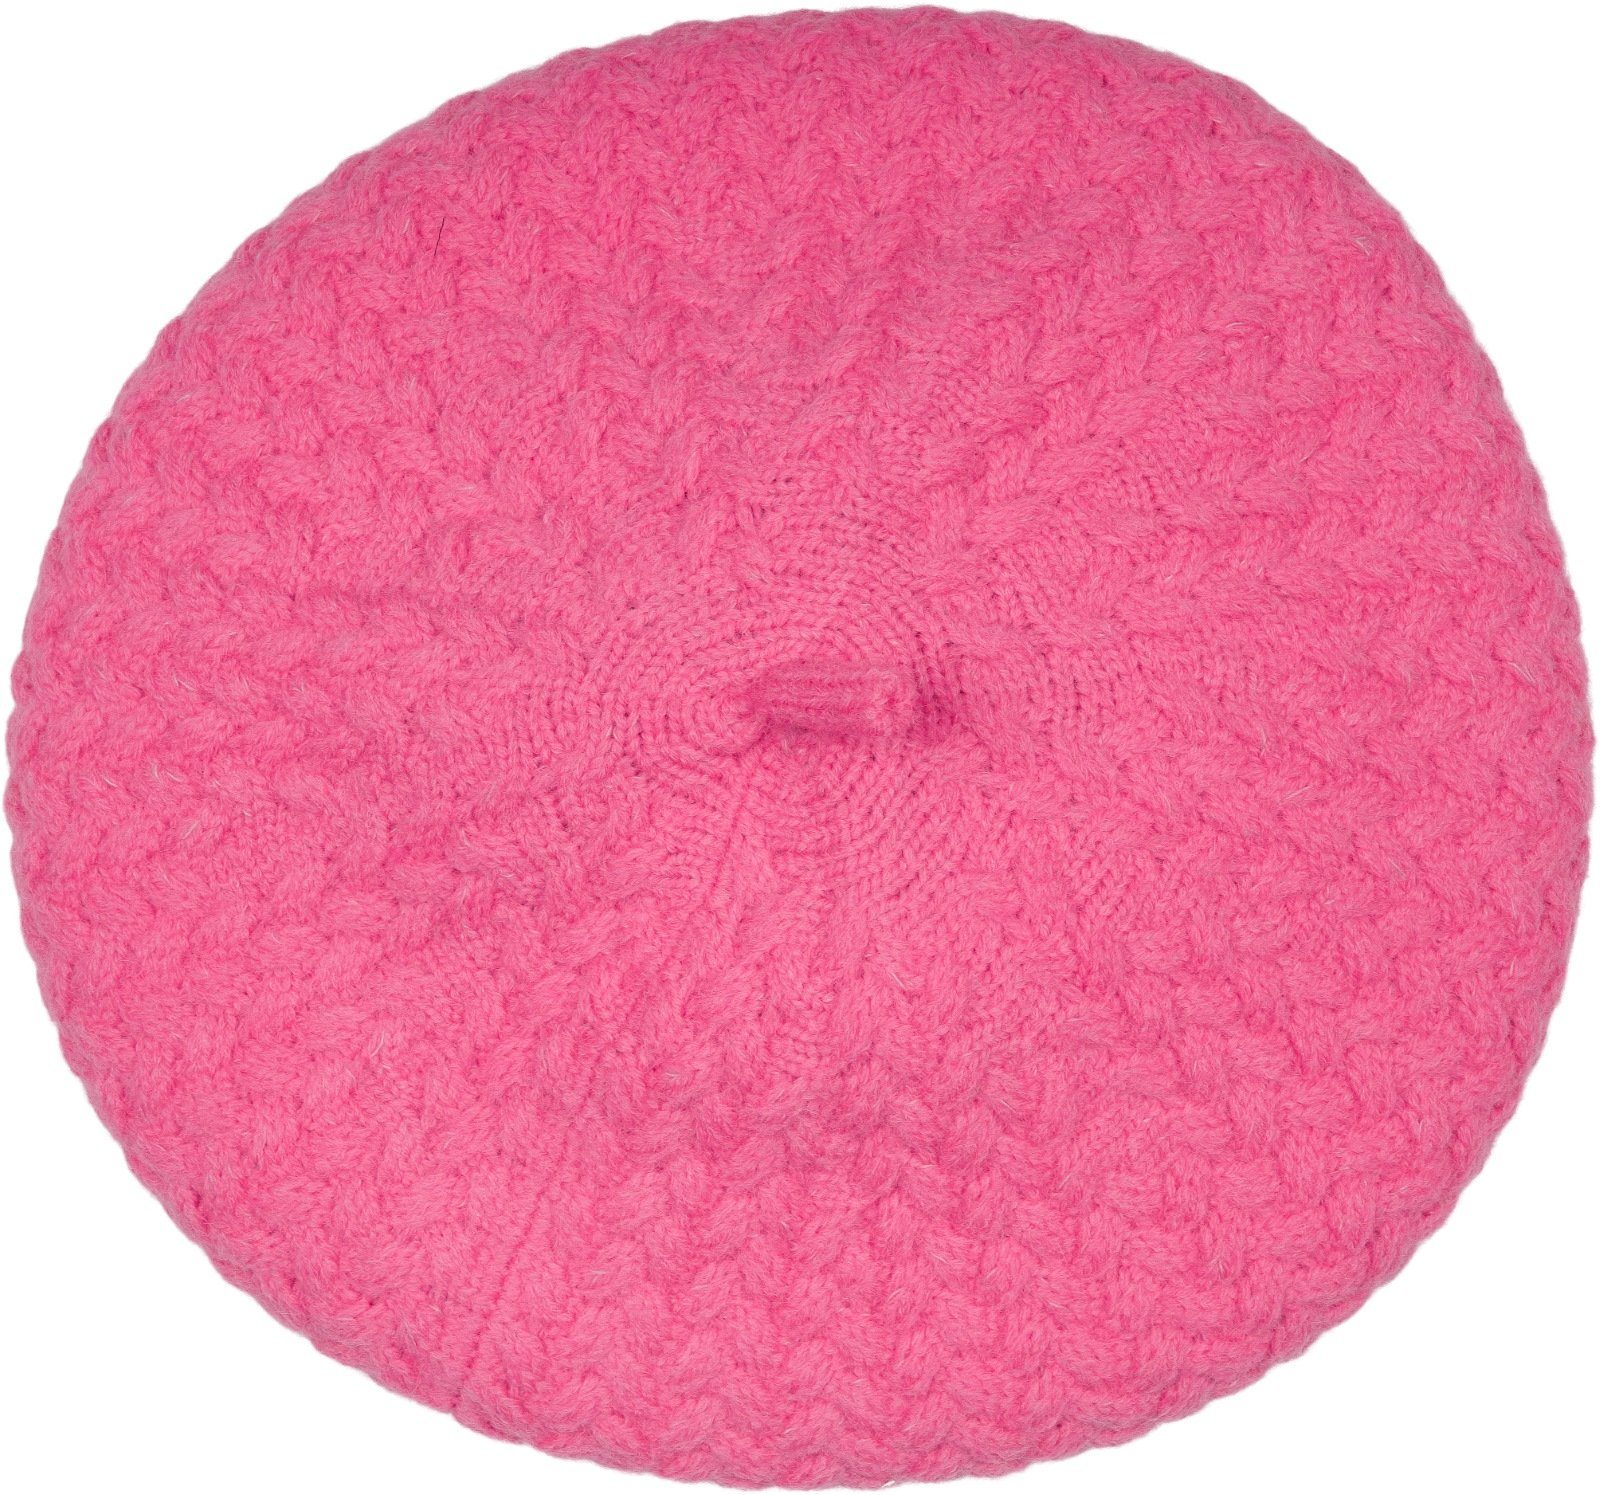 (1-St) Flechtmuster Baskenmütze Pink mit Feinstrick styleBREAKER Baskenmütze